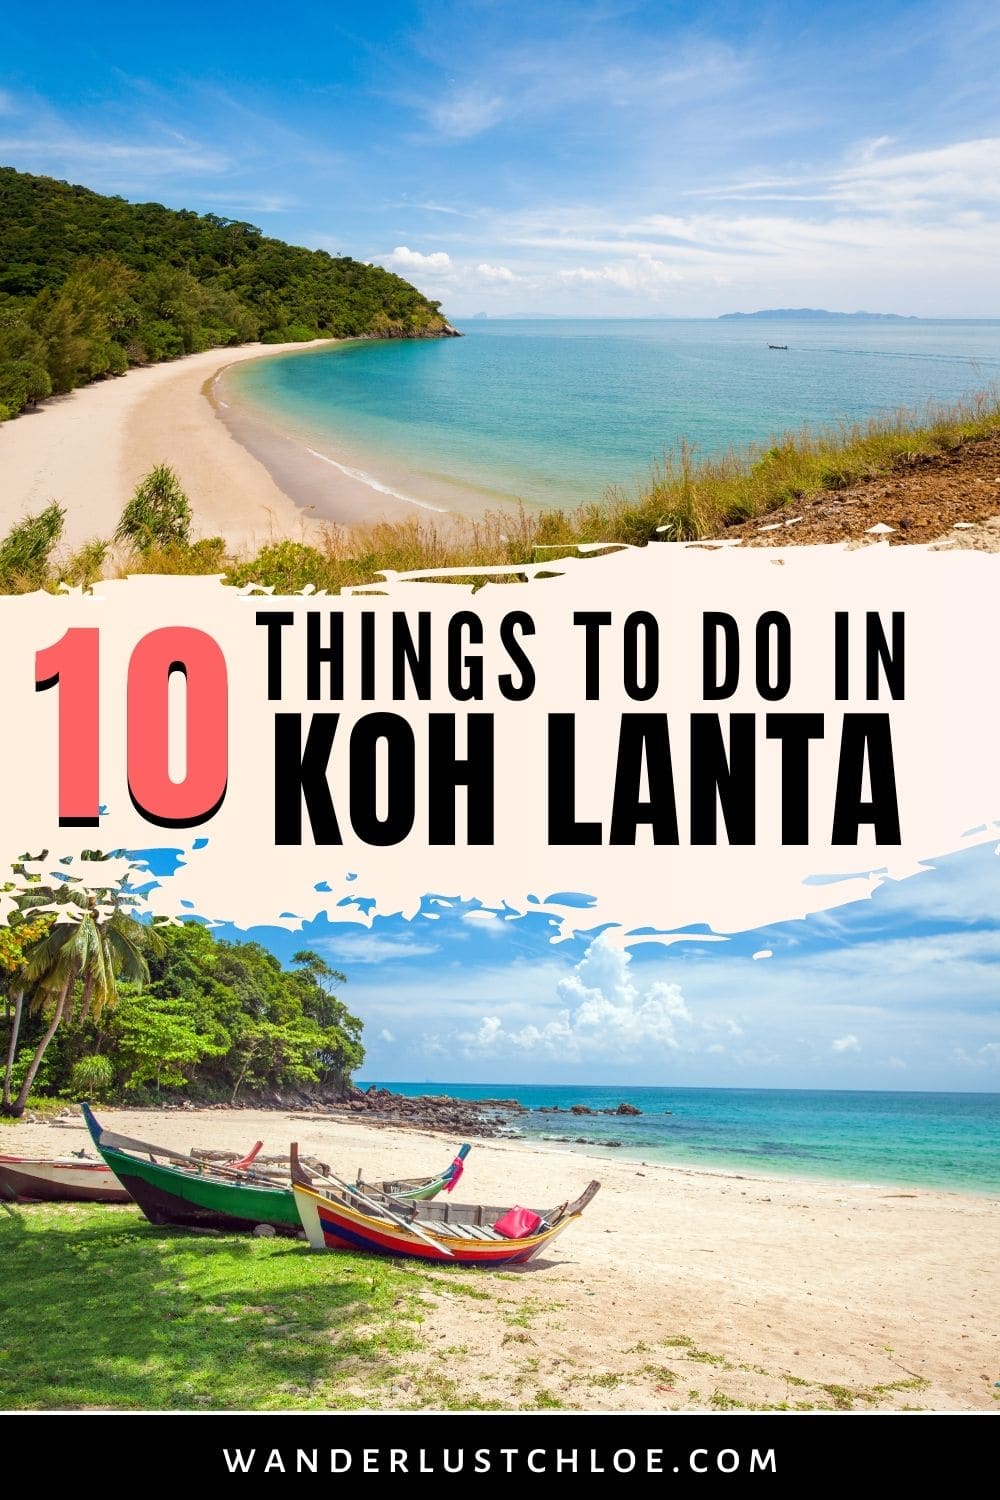 10 Things to do in Koh Lanta, Thailand